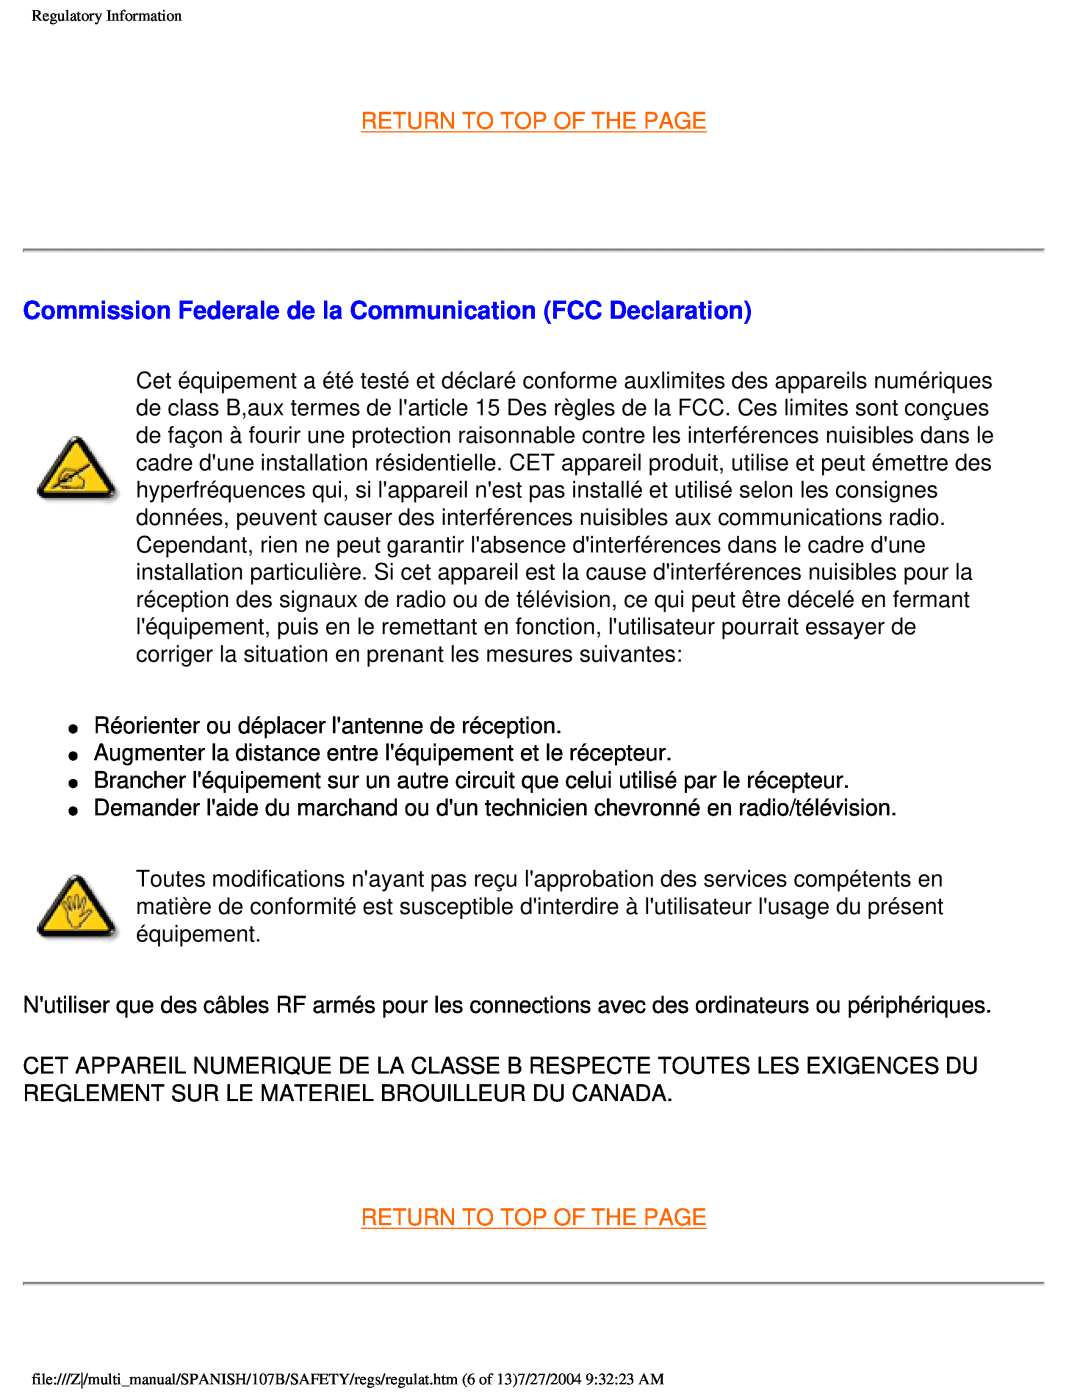 Philips 107B user manual Commission Federale de la Communication FCC Declaration, Return To Top Of The Page 